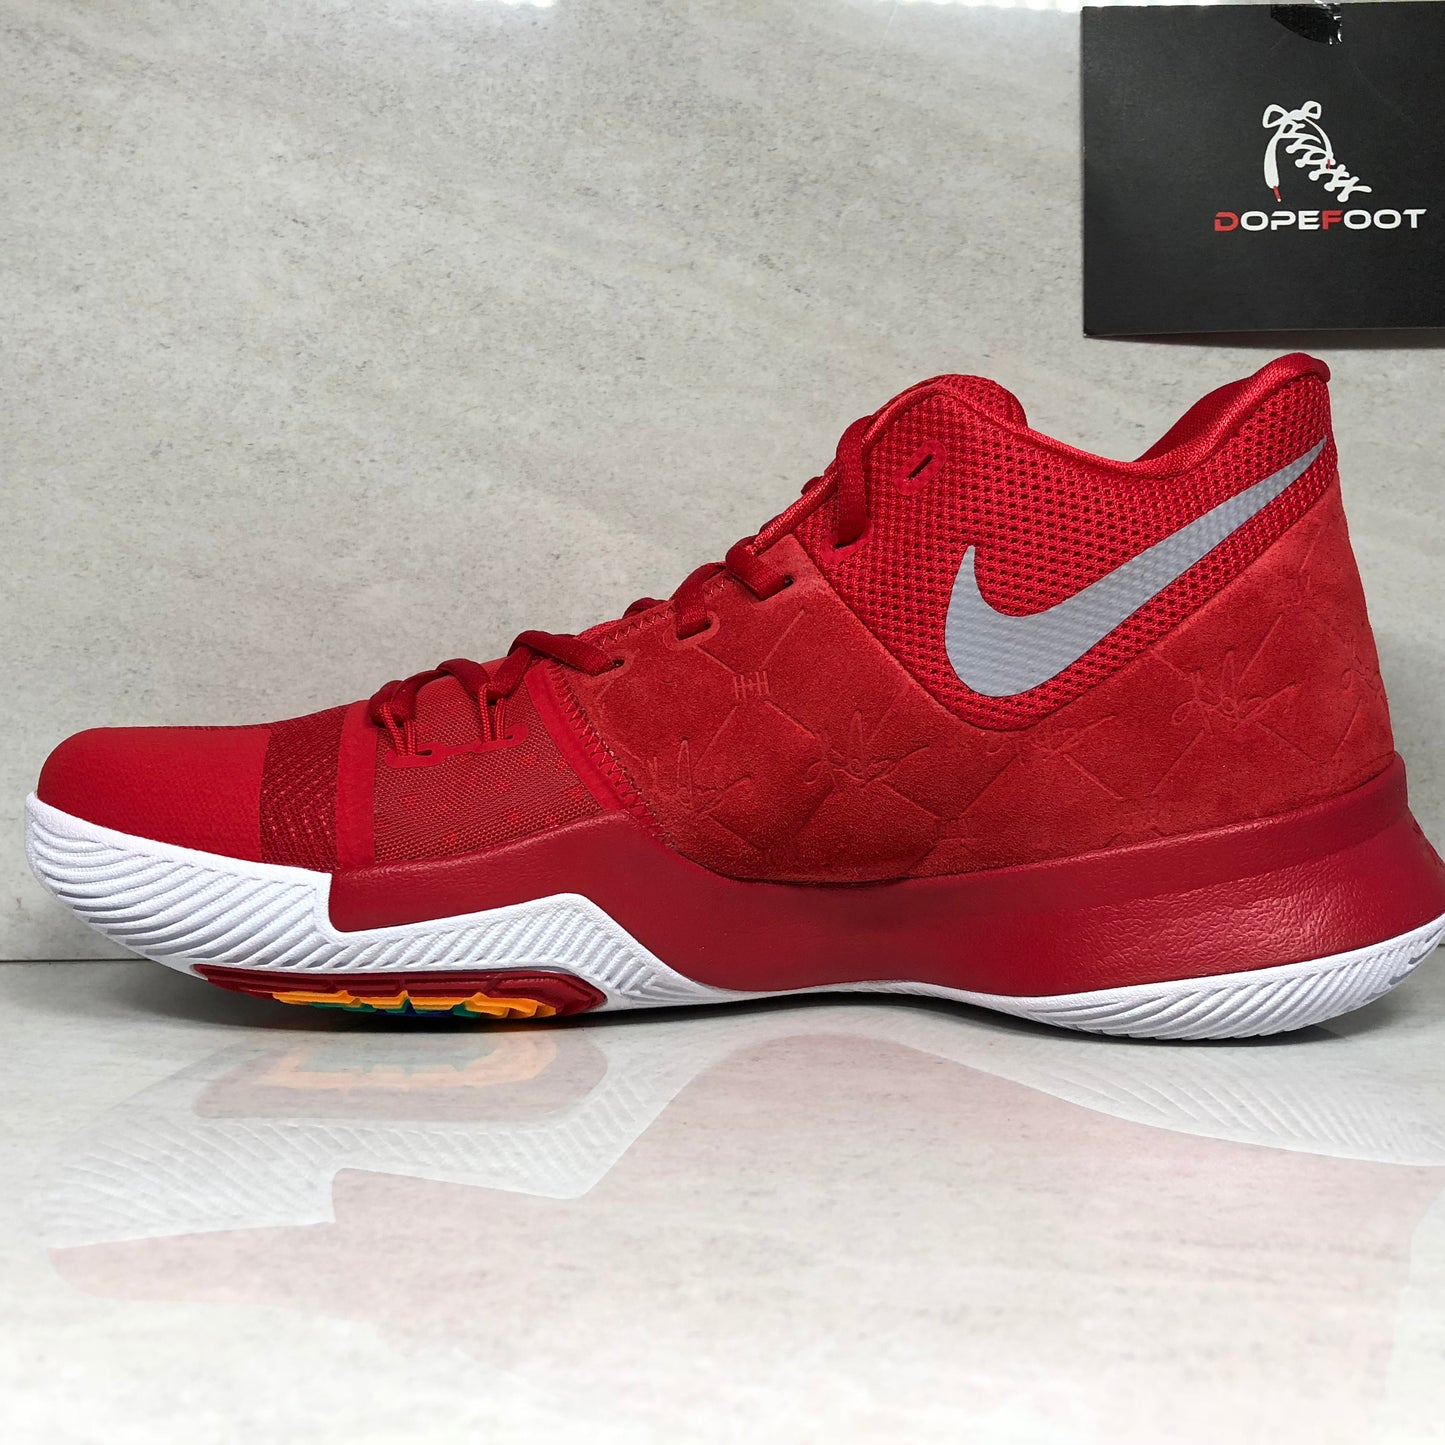 Nike Basketball Kyrie 3 University Red/White - 852395 601 - Men's Size 11.5